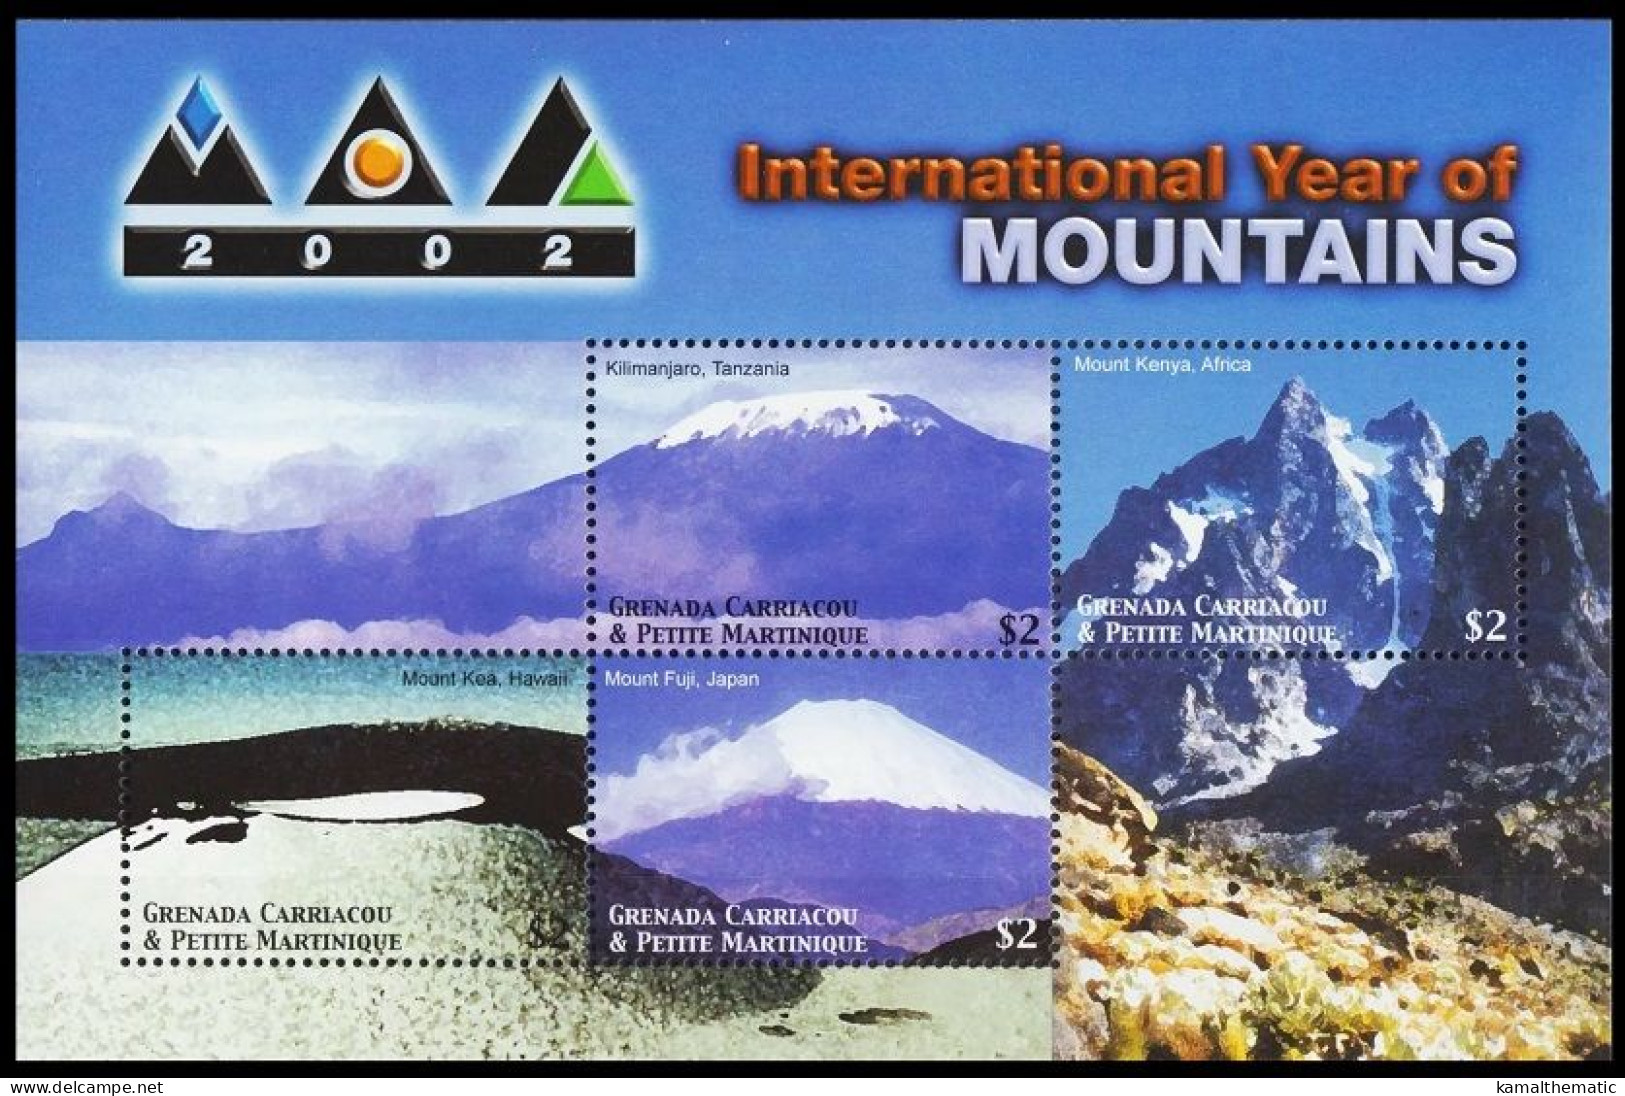 Grenada Ca & Pe Martinique 2002 MNH SS, Mountains Kilimanjaro, Fuji, Kenya, Kea, Volcanoes - Mountains